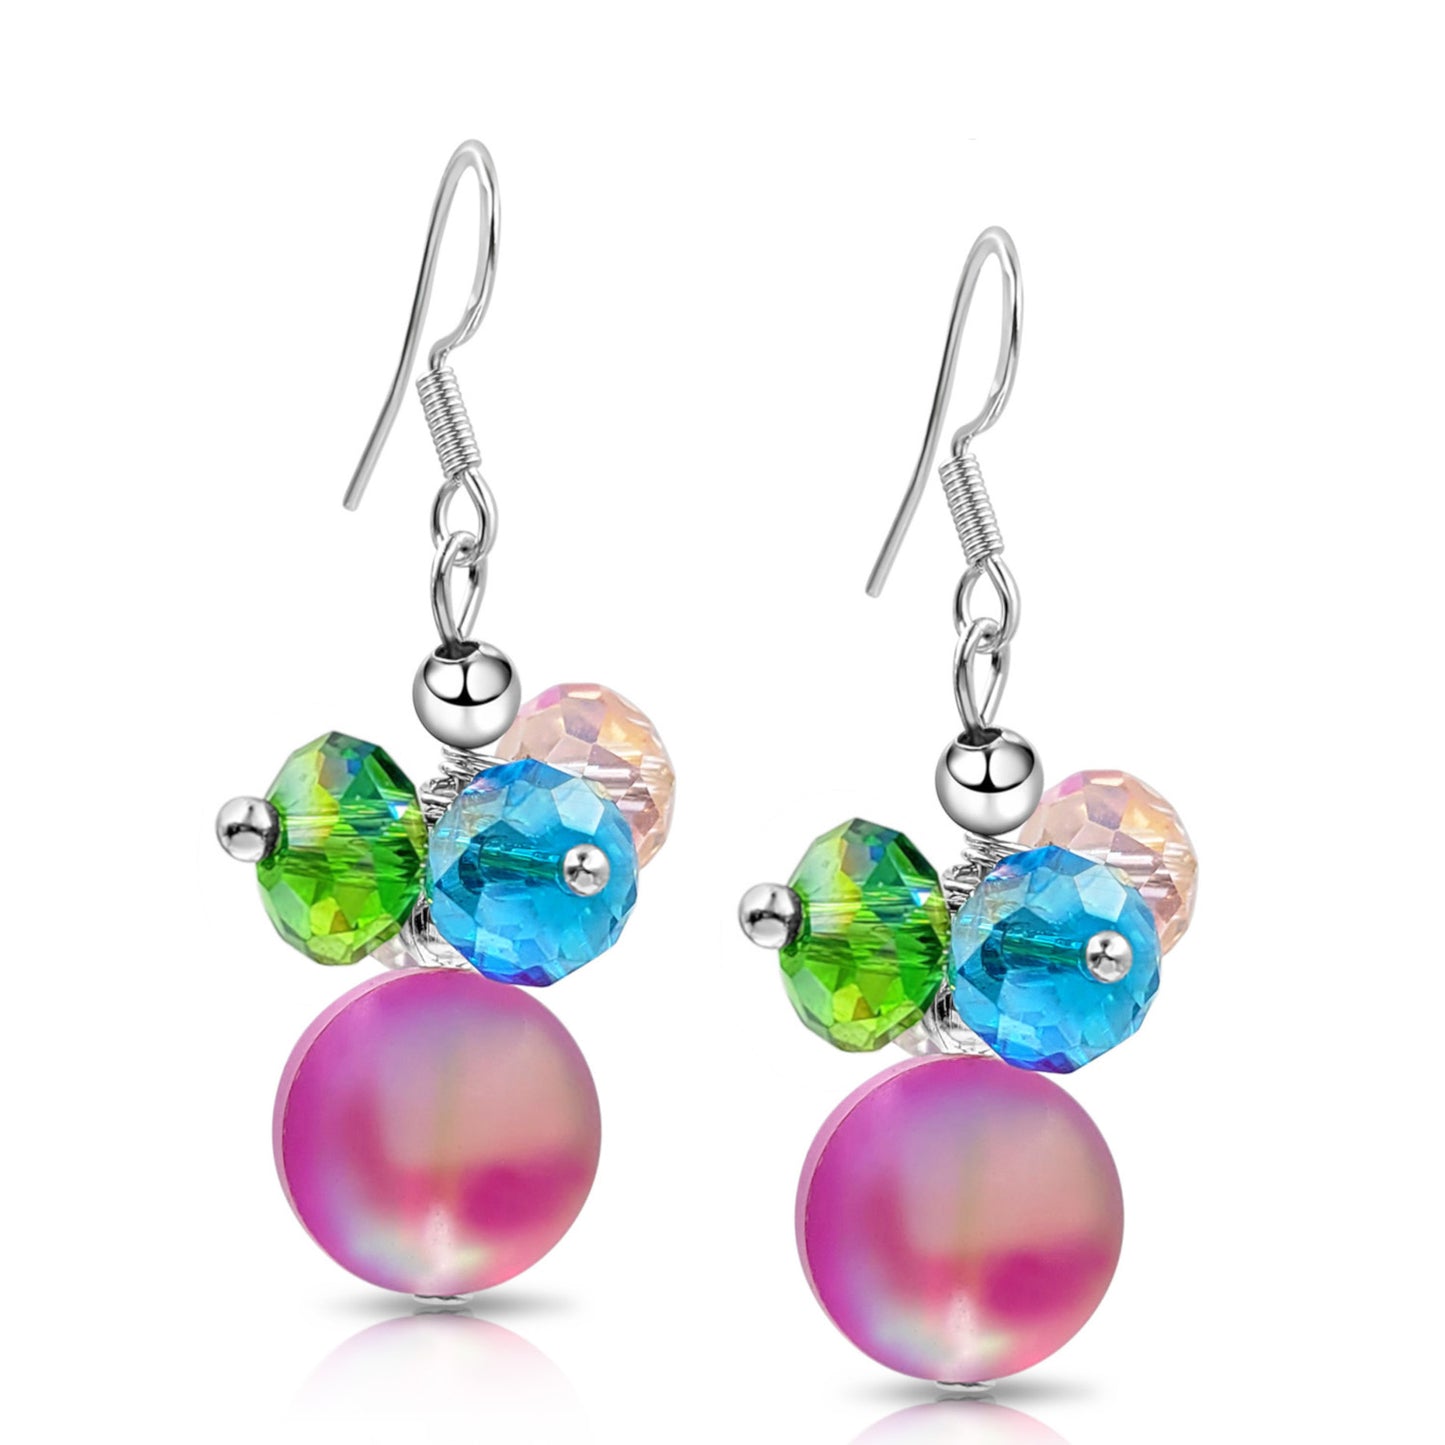 BESHEEK Rainbow 'Bubbles' Mermaid Glass and Crystal Dangle Earrings. | Handmade Hypoallergenic Boho Beach Gala Wedding Style Fashion Earrings